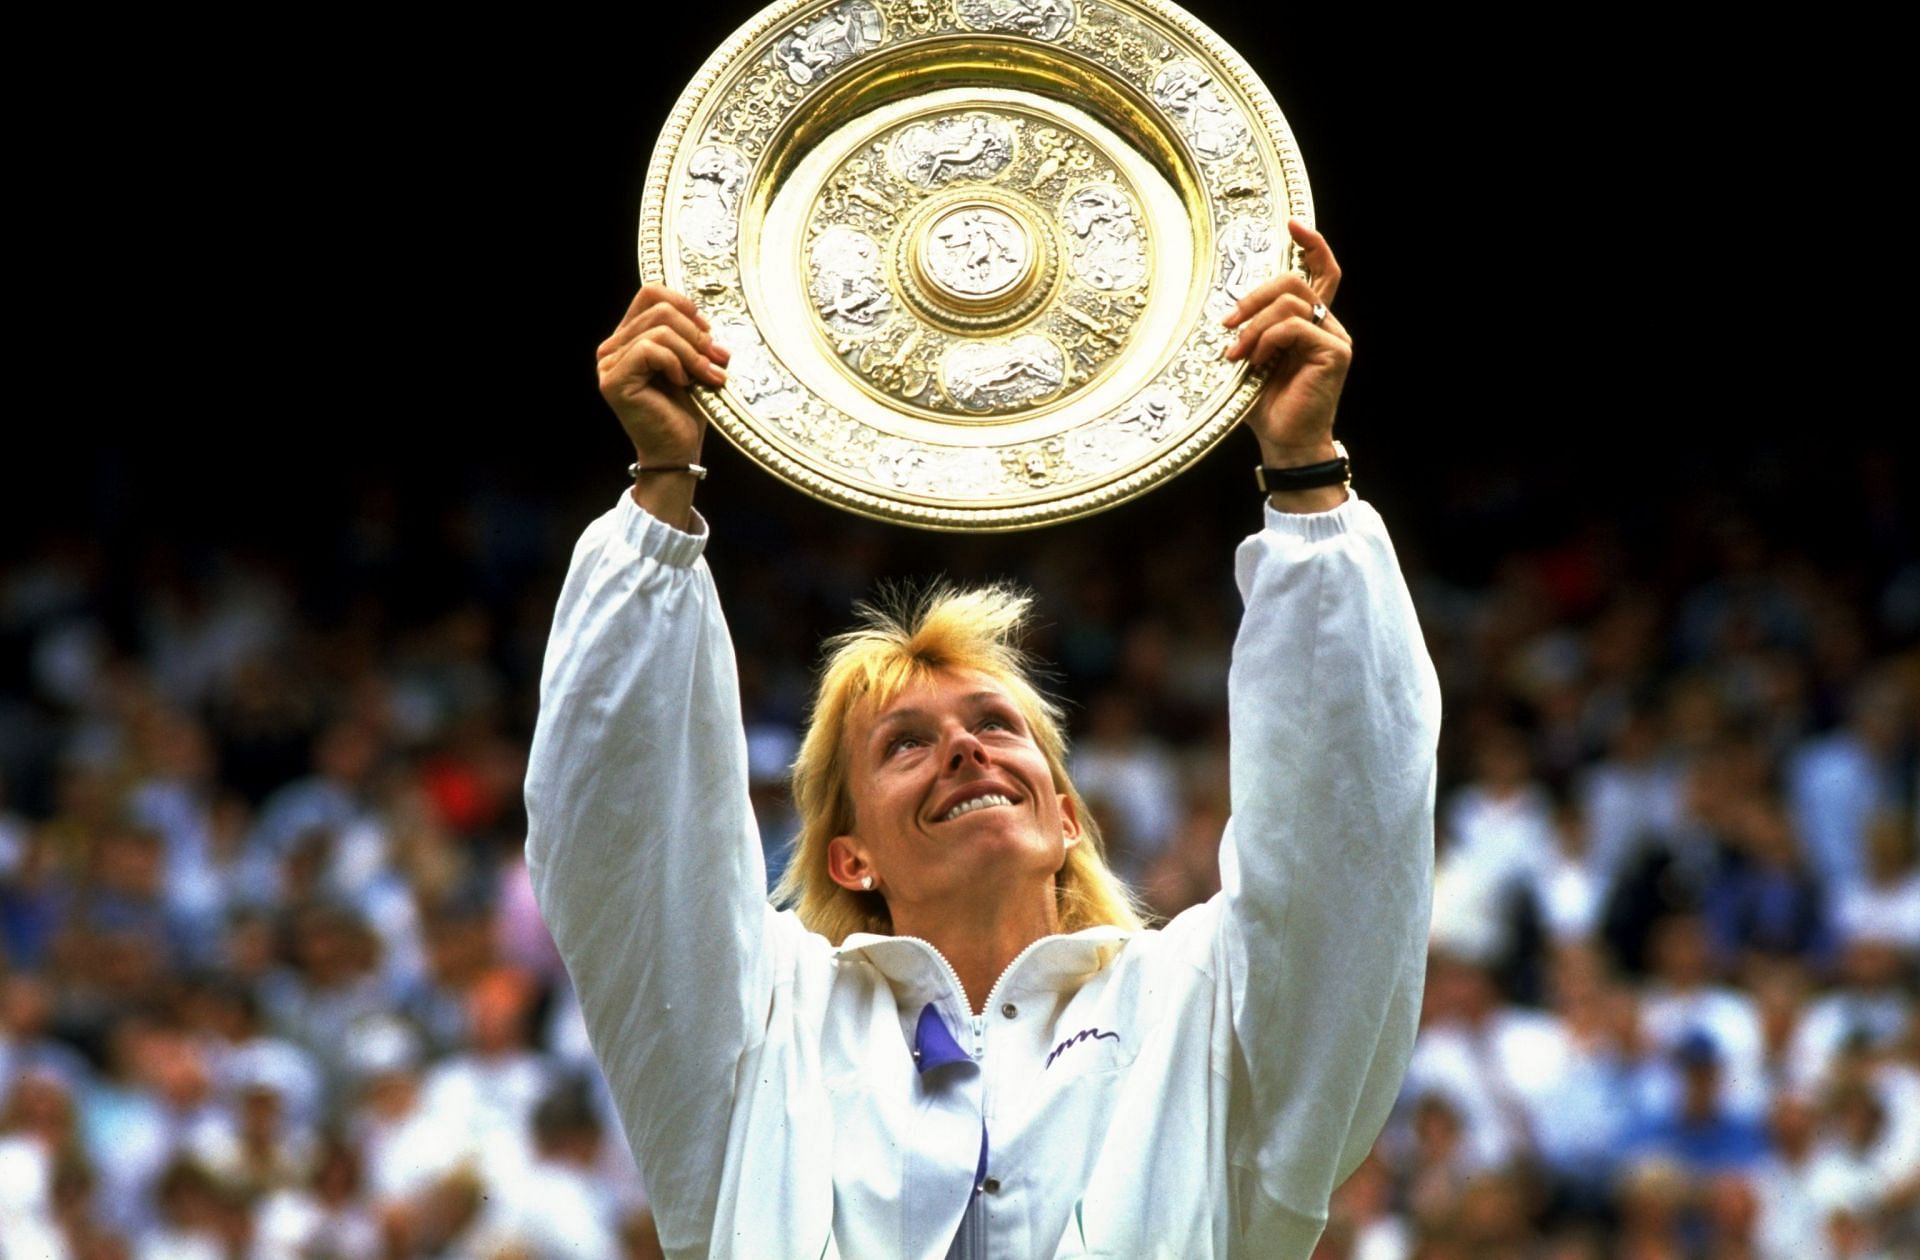 Martina Navratilova won the Wimbledon title 9 times